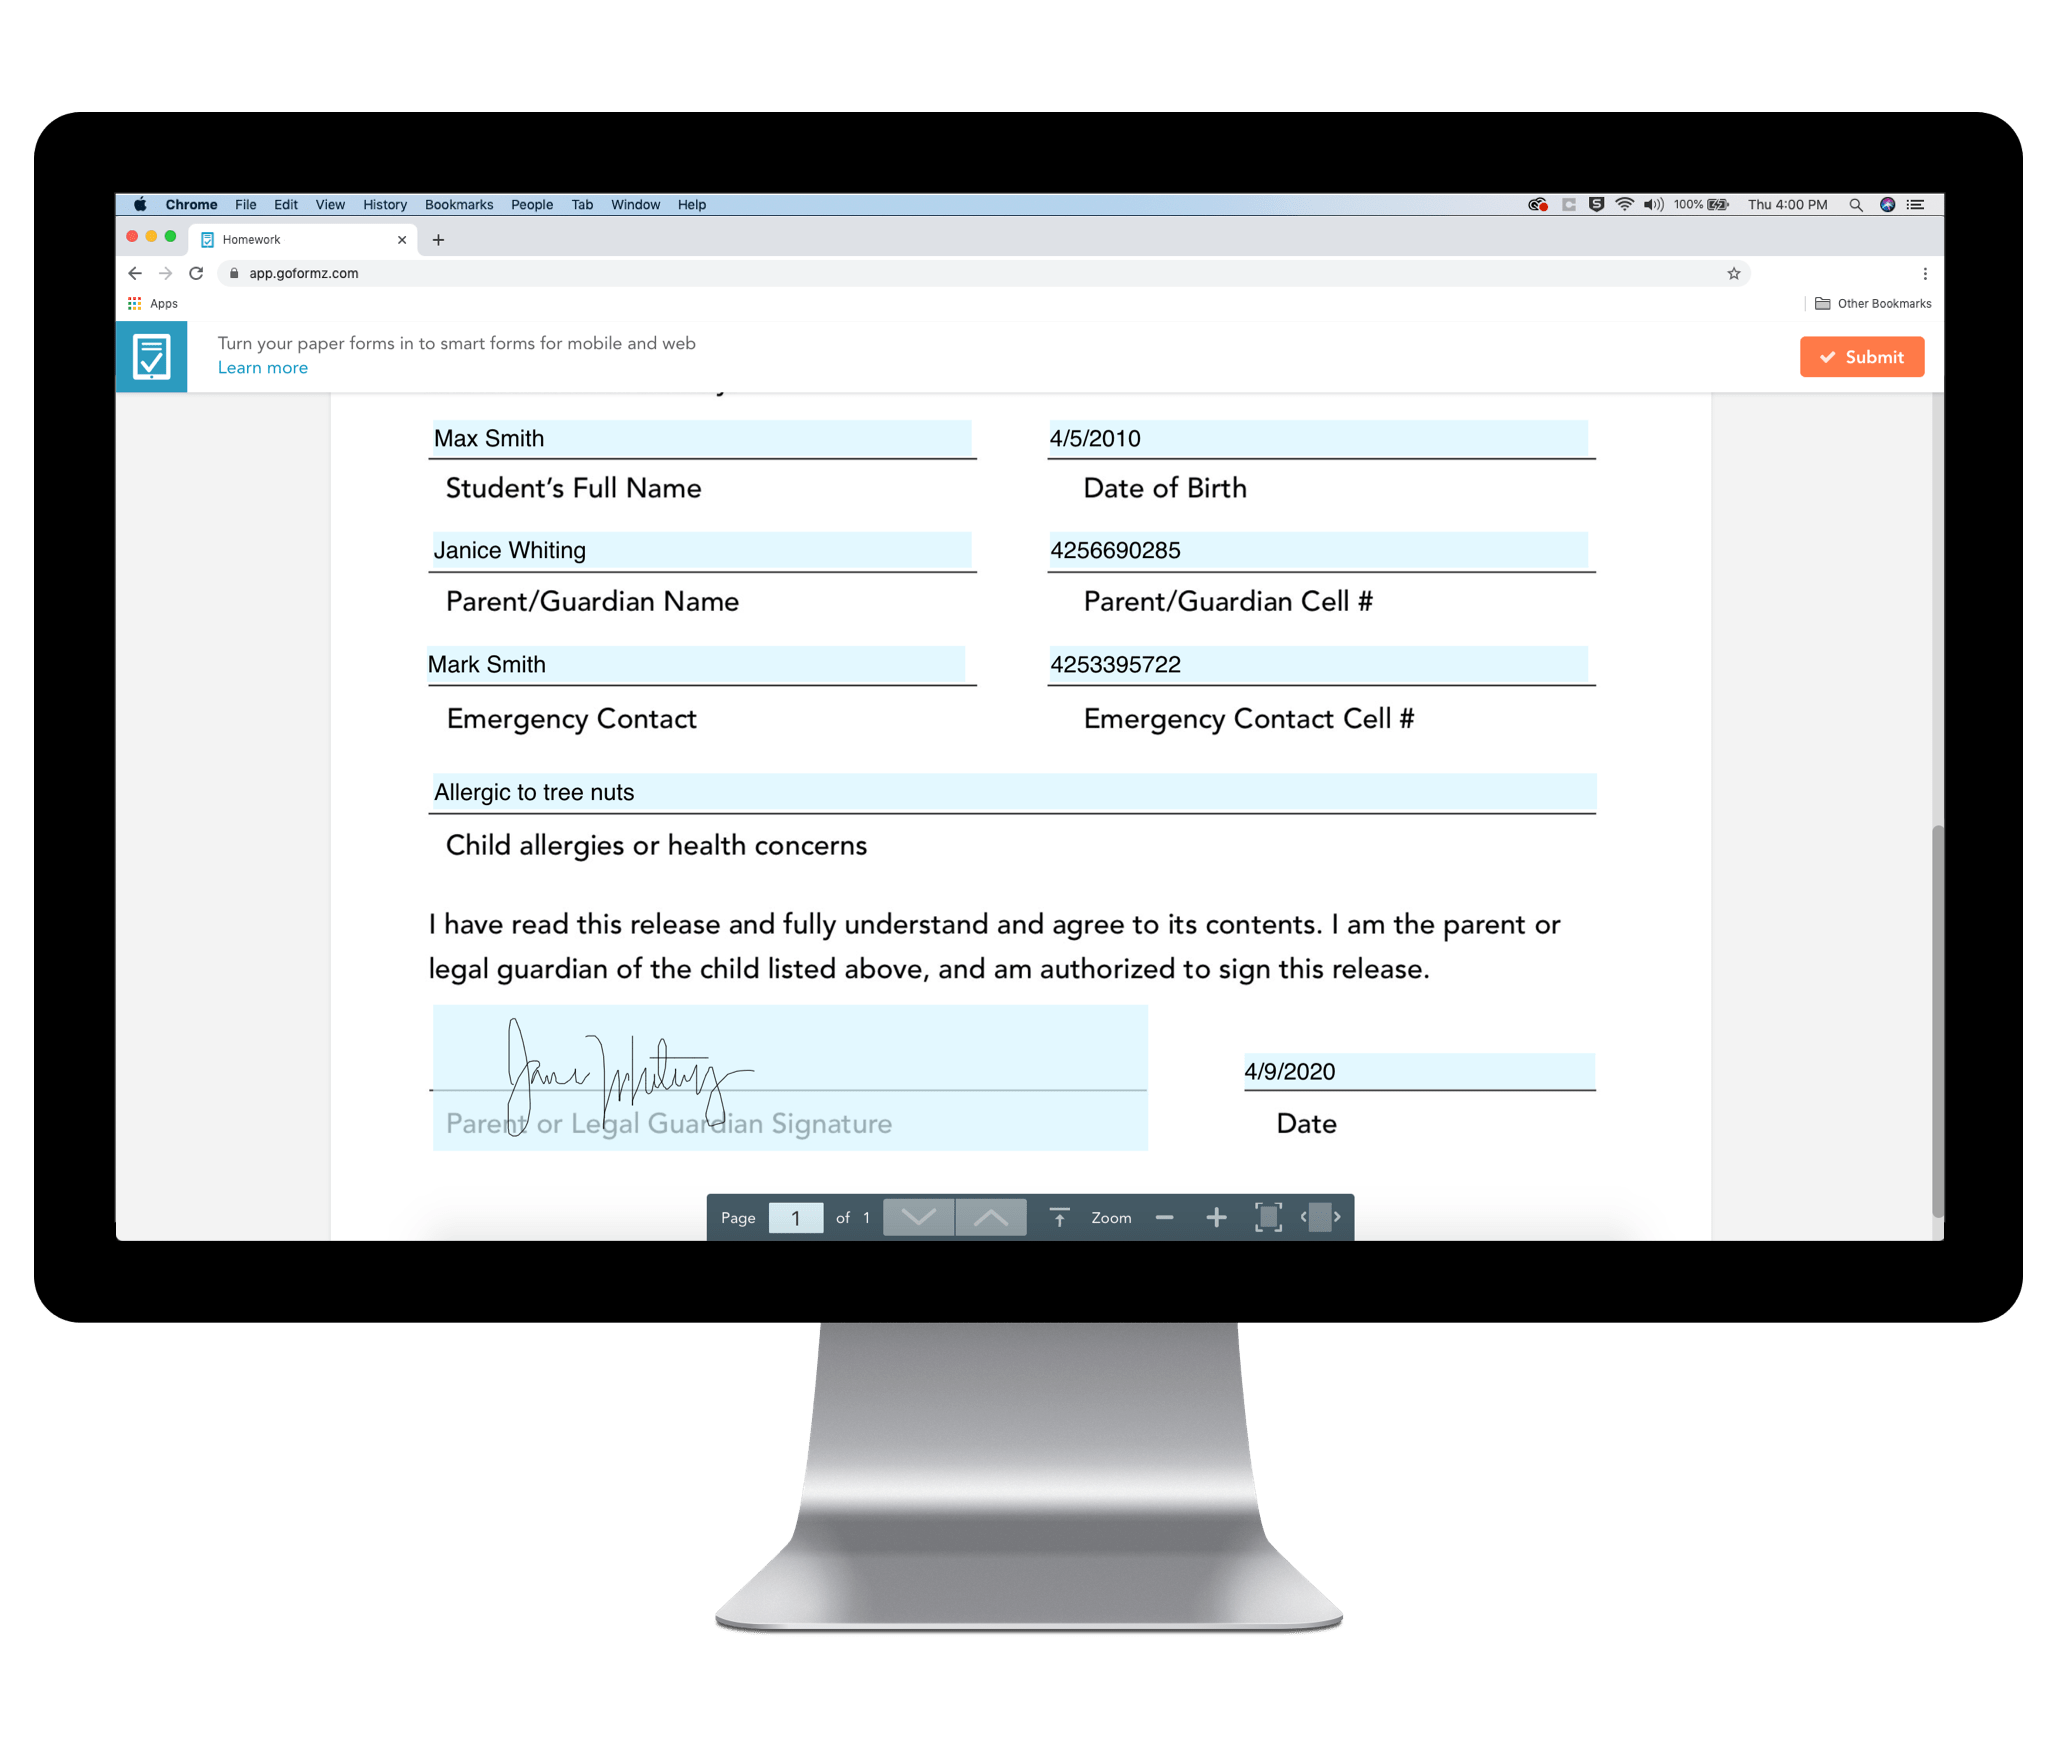 A digital release form permission slip shown on a desktop computer.